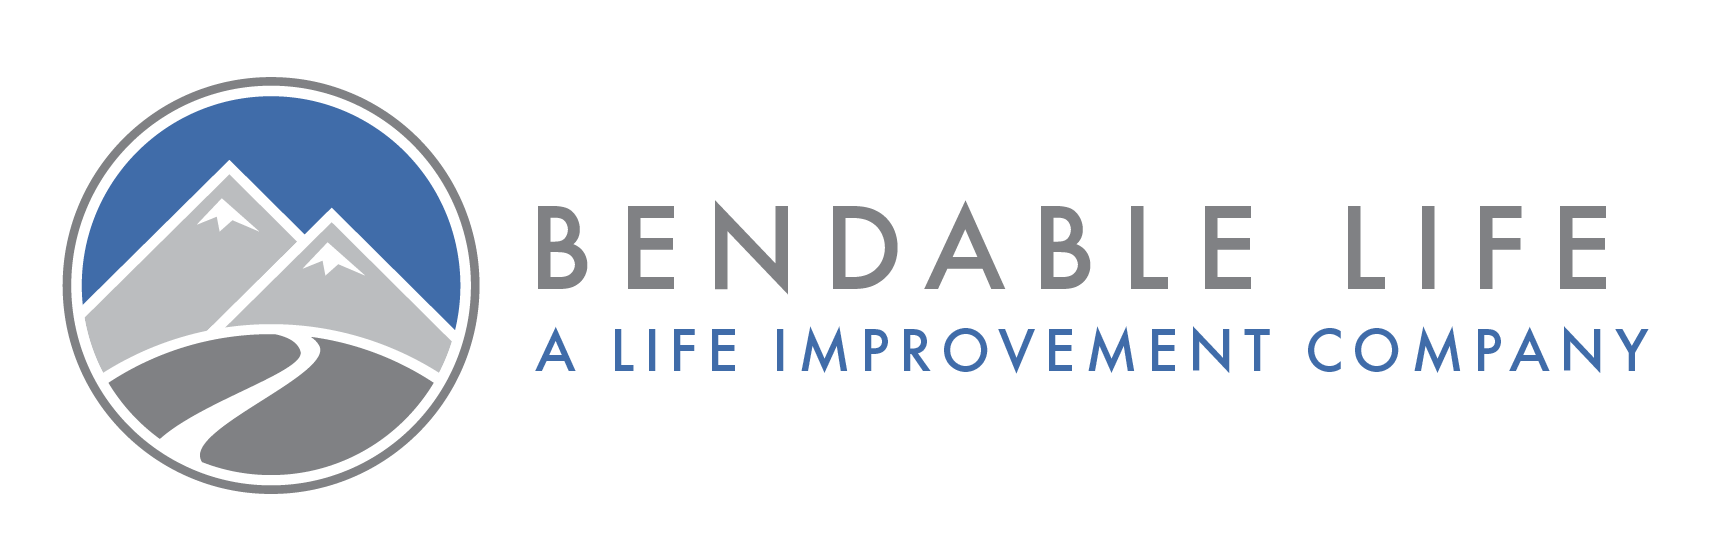 Bendable Life